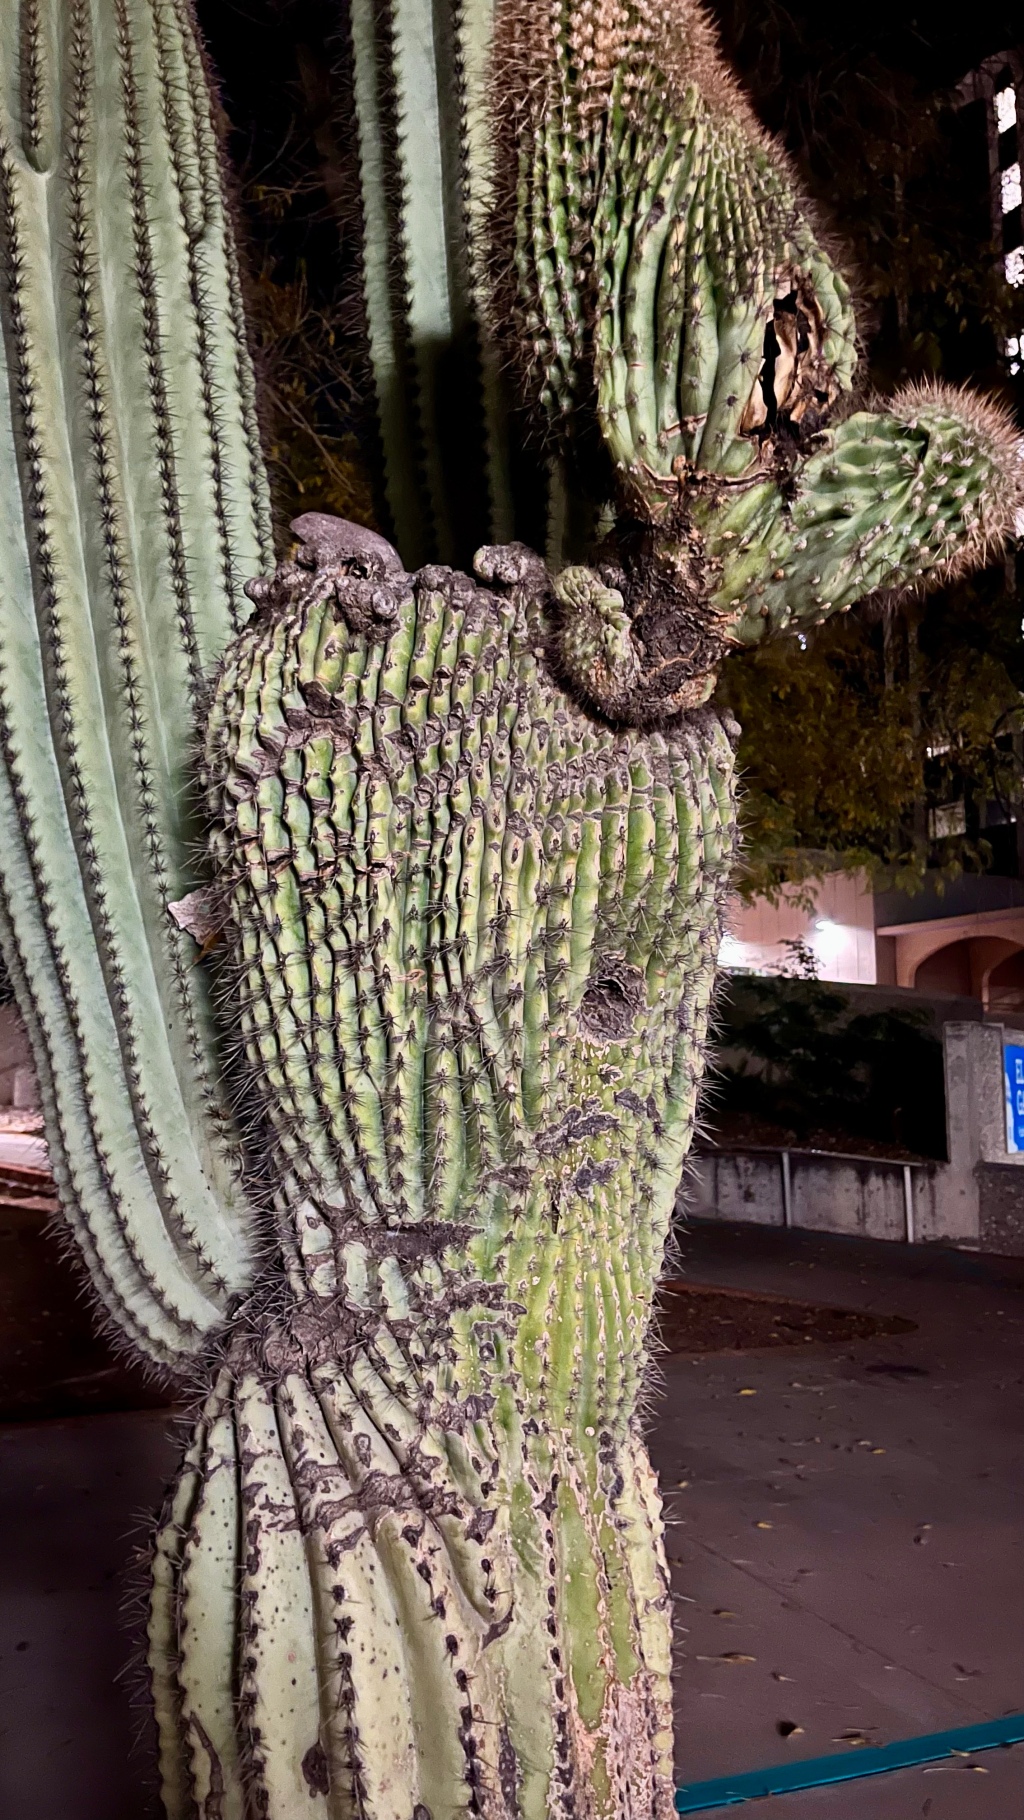 Fasciation is Fascinating: Saguaro Edition